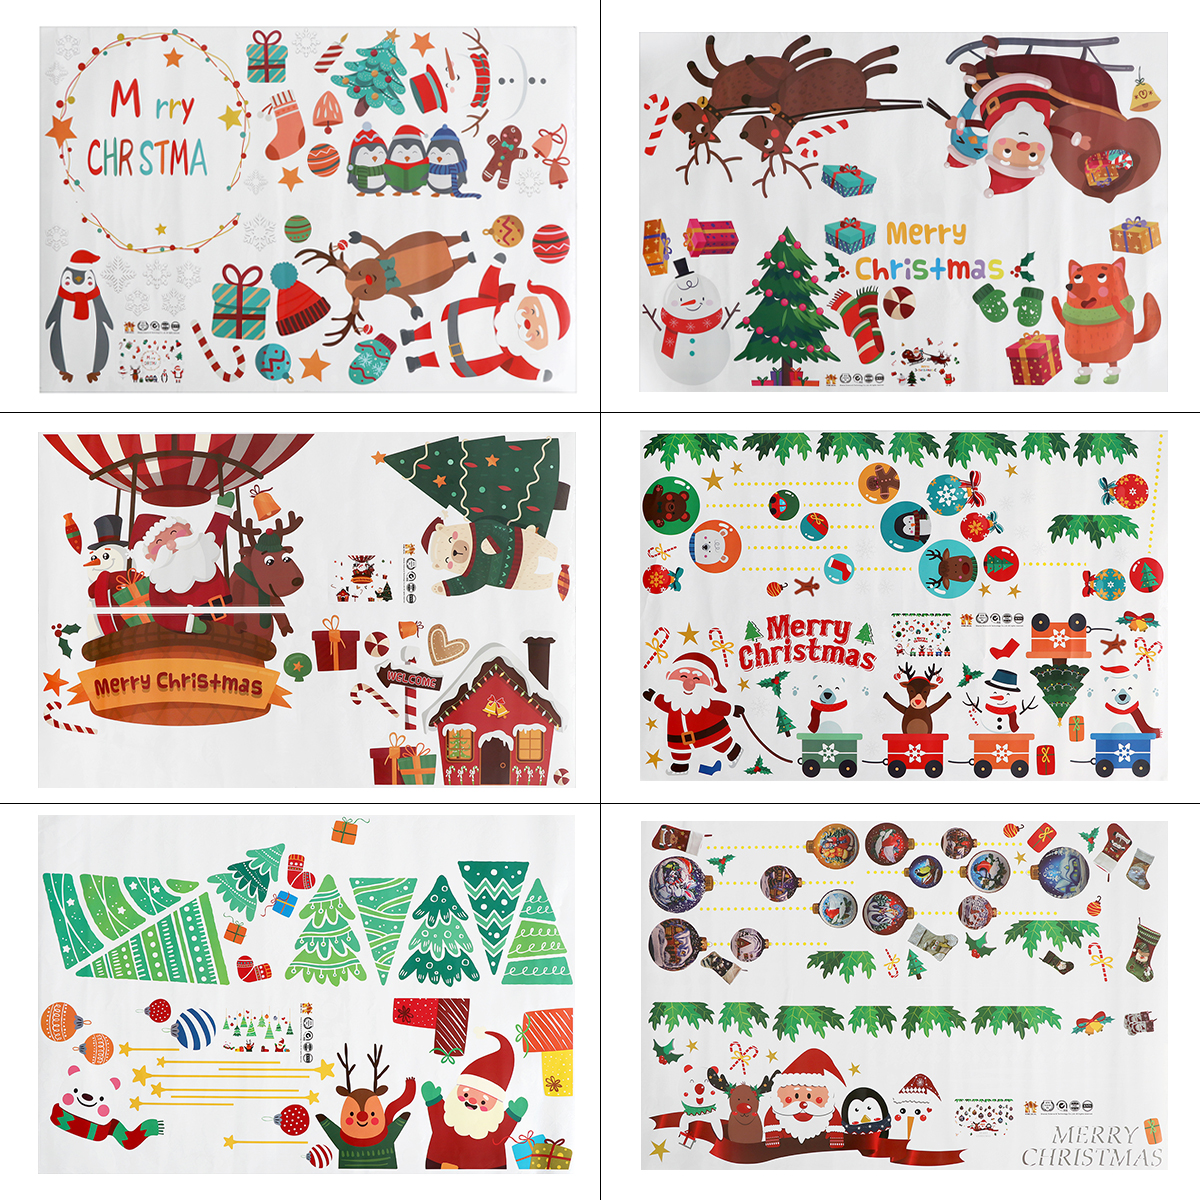 2020-Christmas-Decoration-Sticker-Glass-windows-Decals-Merry-Christmas-Home-Decoration-Wall-Stickers-1764899-3